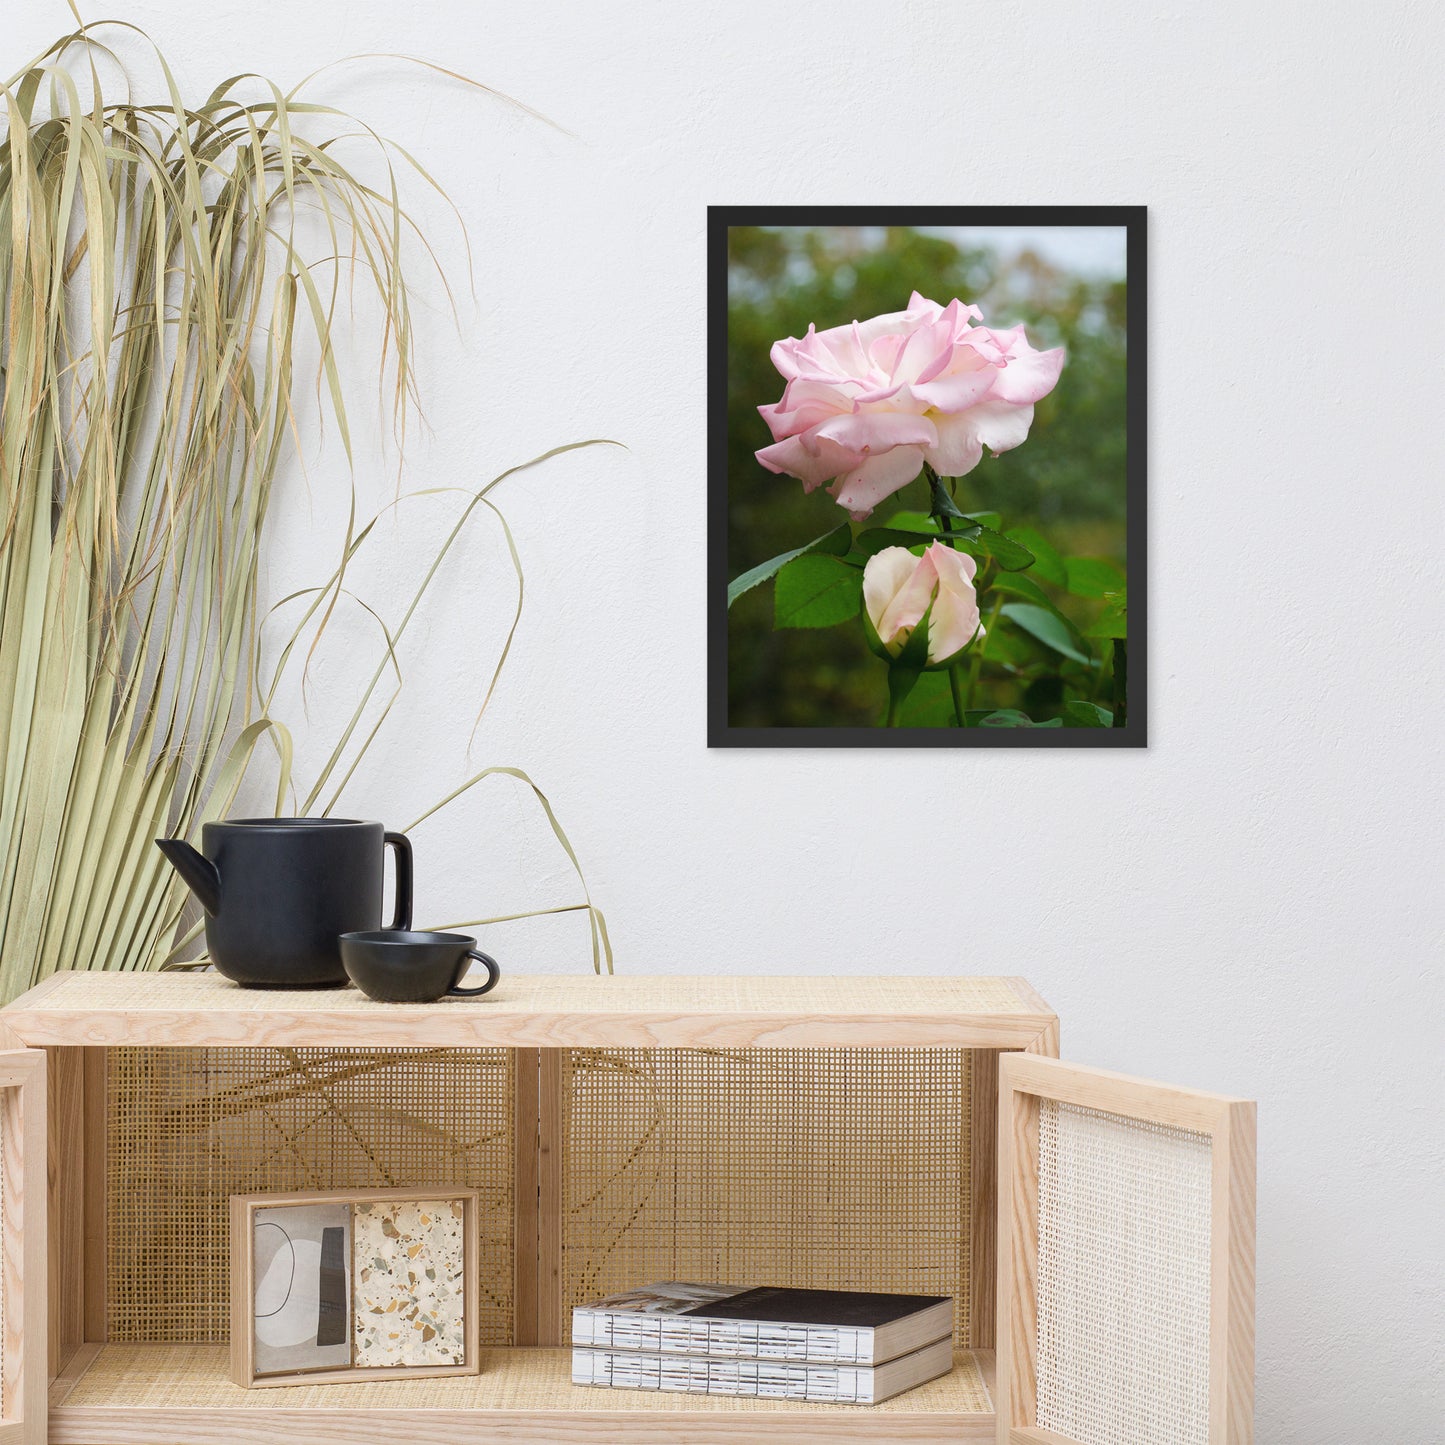 Flower Framed Art: Admiration - Pink Rose Floral / Botanical / Nature Photo Framed Wall Art Print - Artwork - Wall Decor - Home Decor